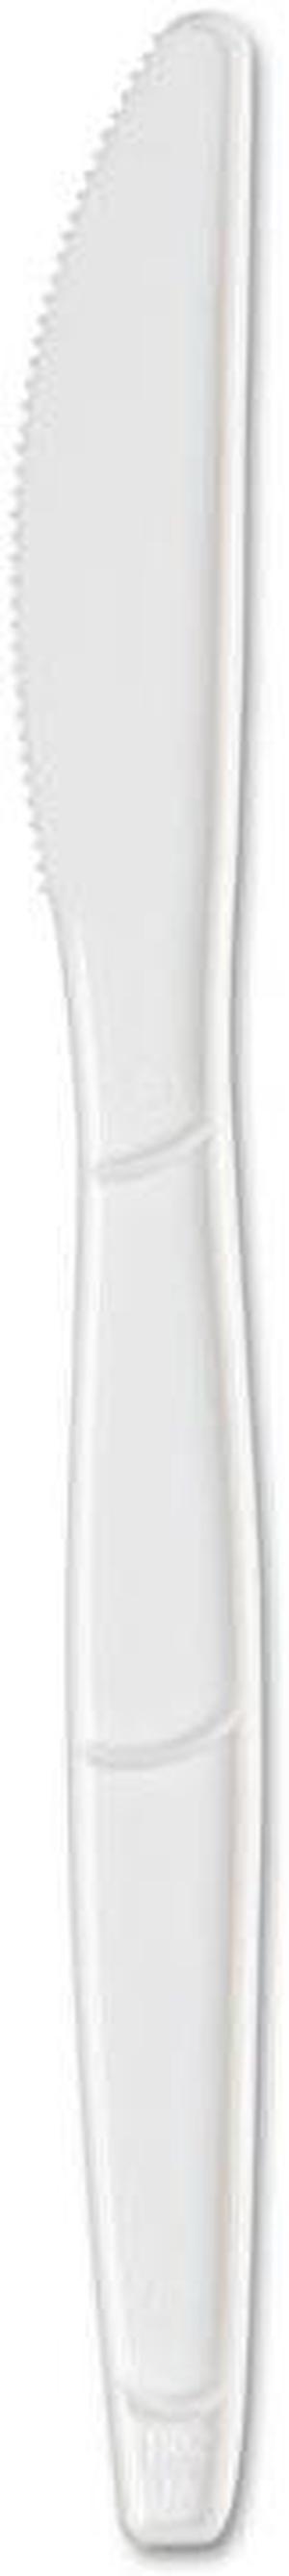 SmartStock Plastic Cutlery Refill 6.3in Knife White 40/Pack 24 Packs/Case